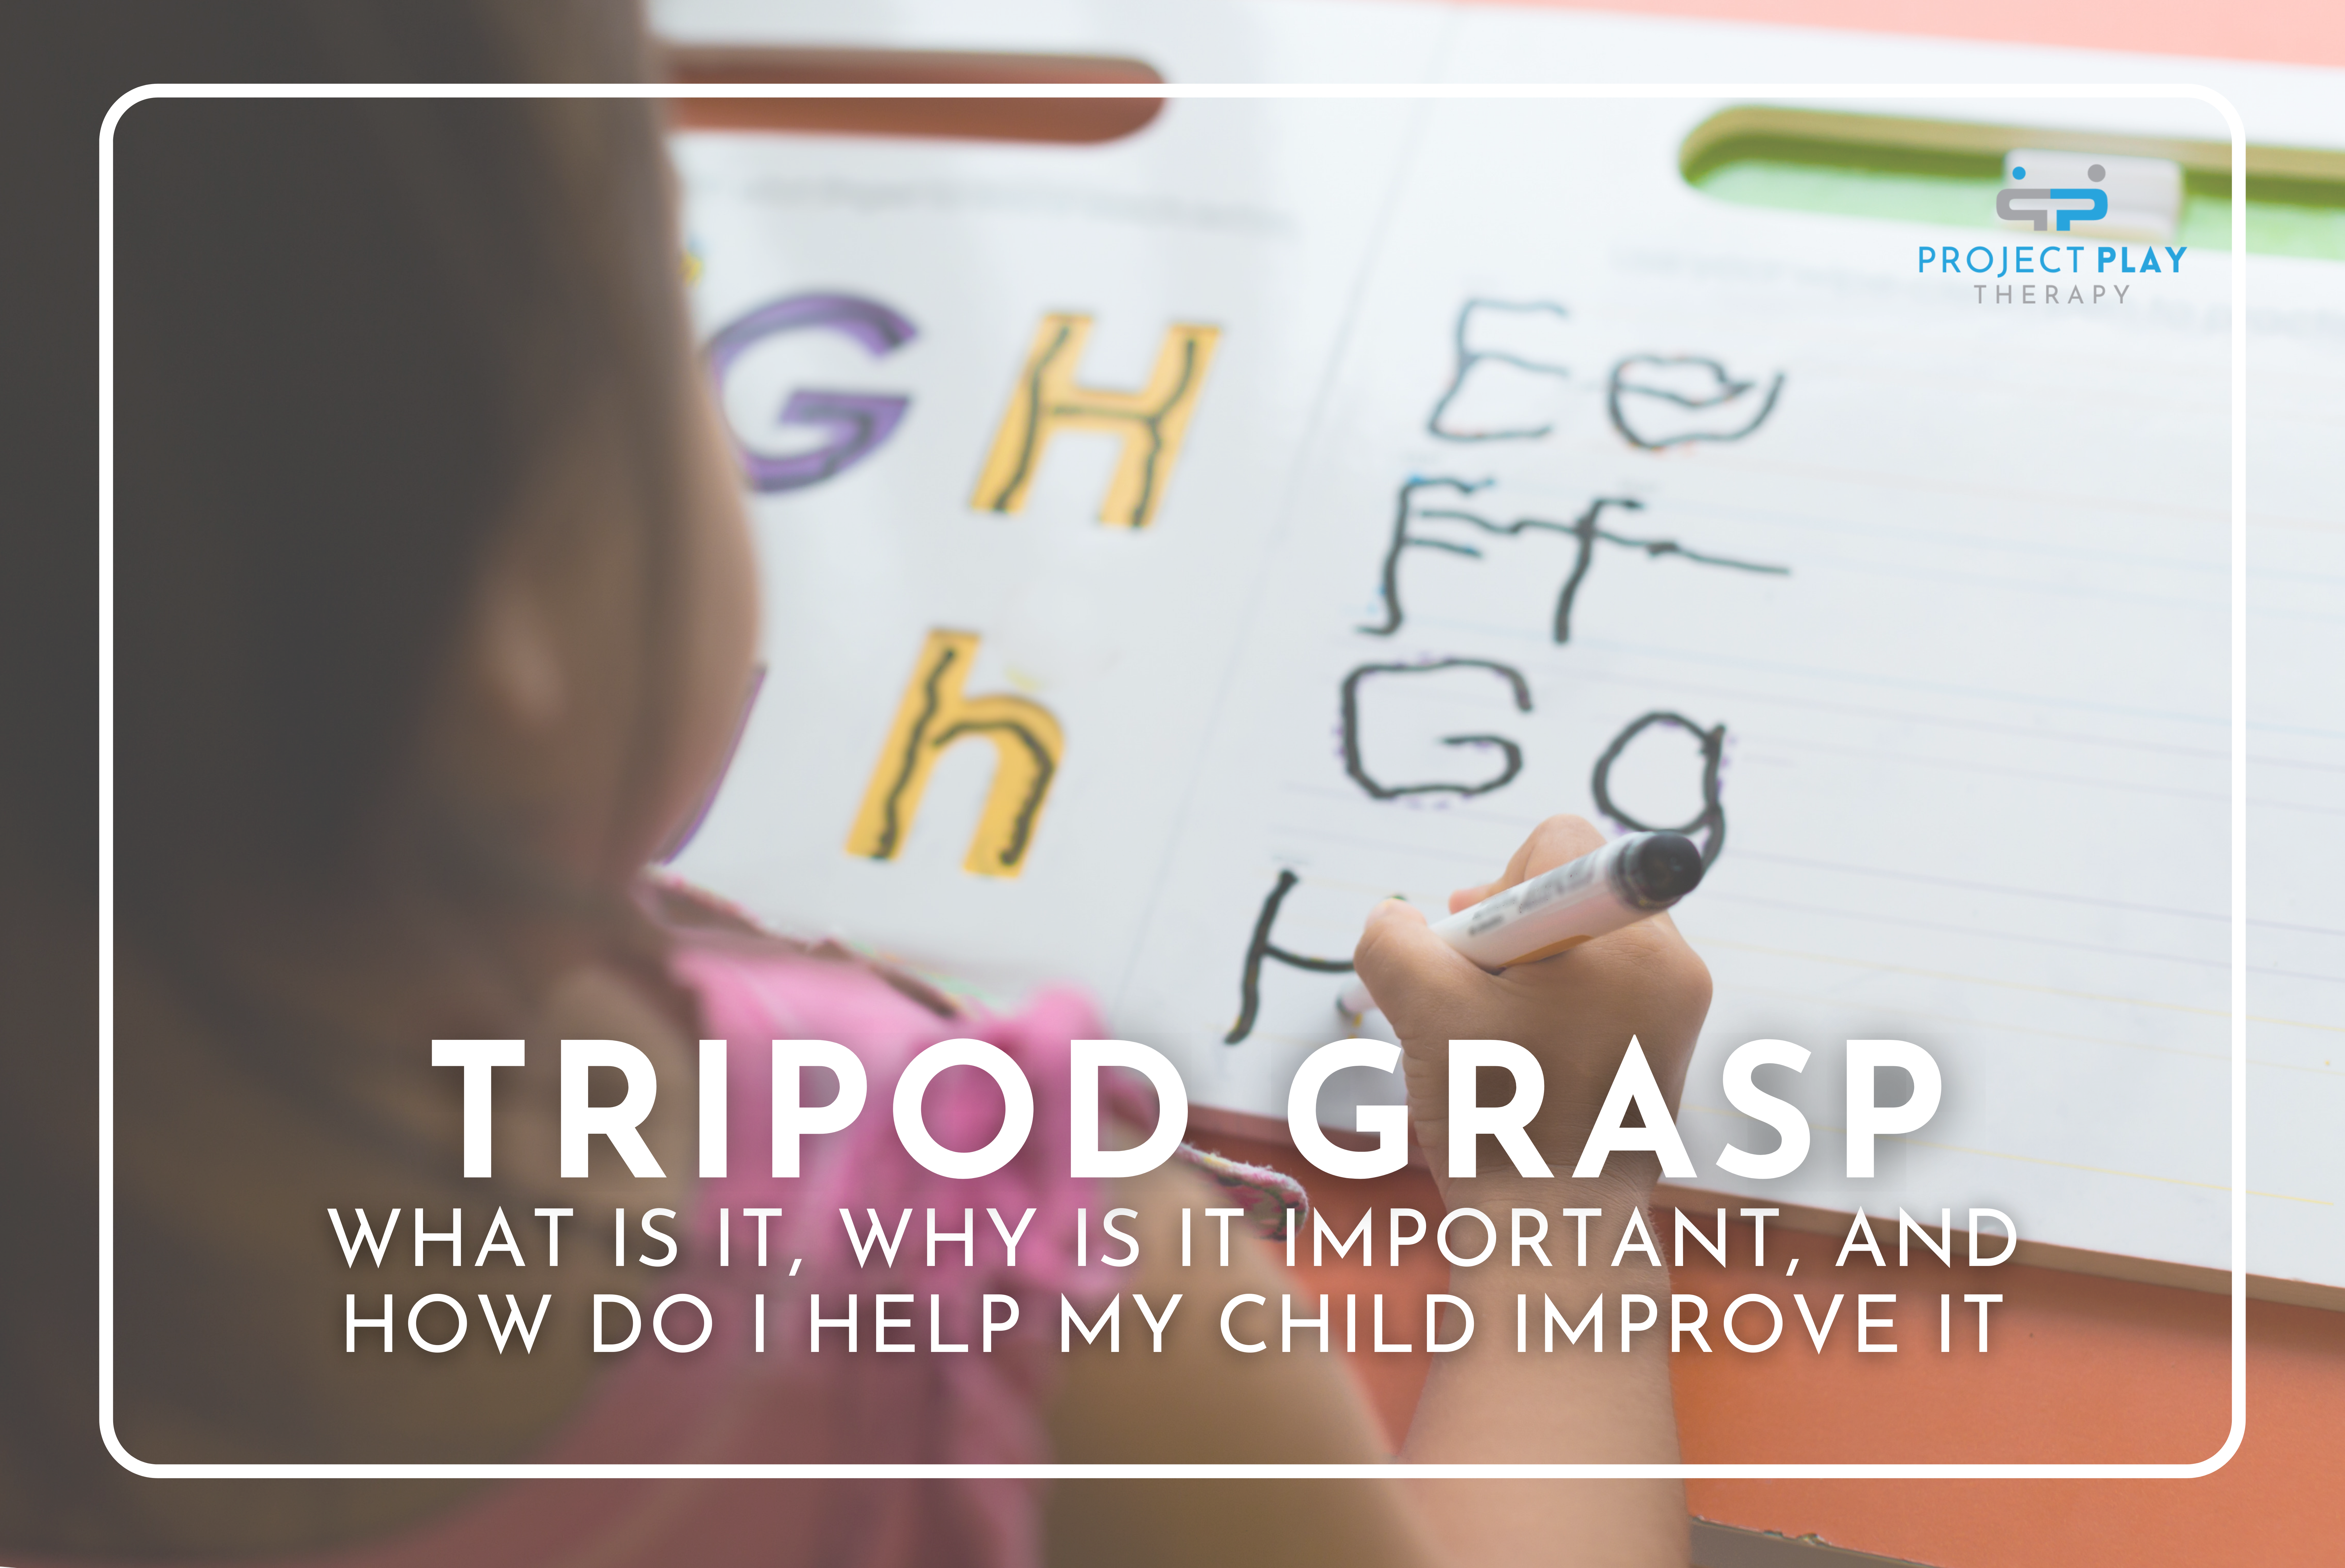 Why a Tripod Grasp?